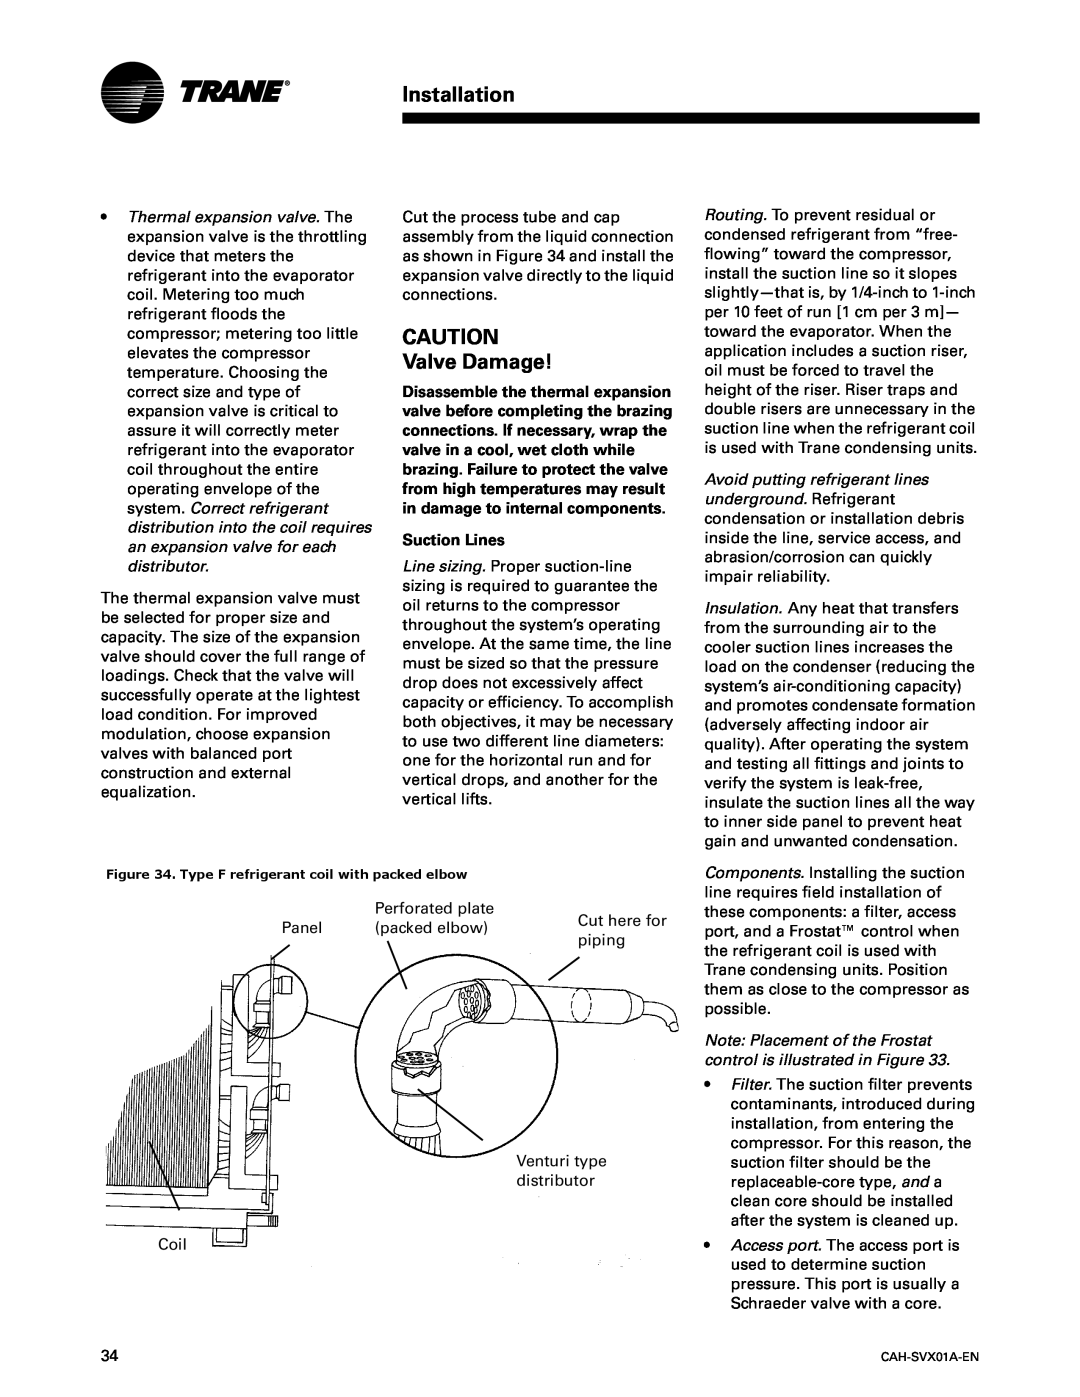 Trane CAH-SVX01A-EN, Custom Climate Changer Air Handlers manual Valve Damage, Installation, Suction Lines 